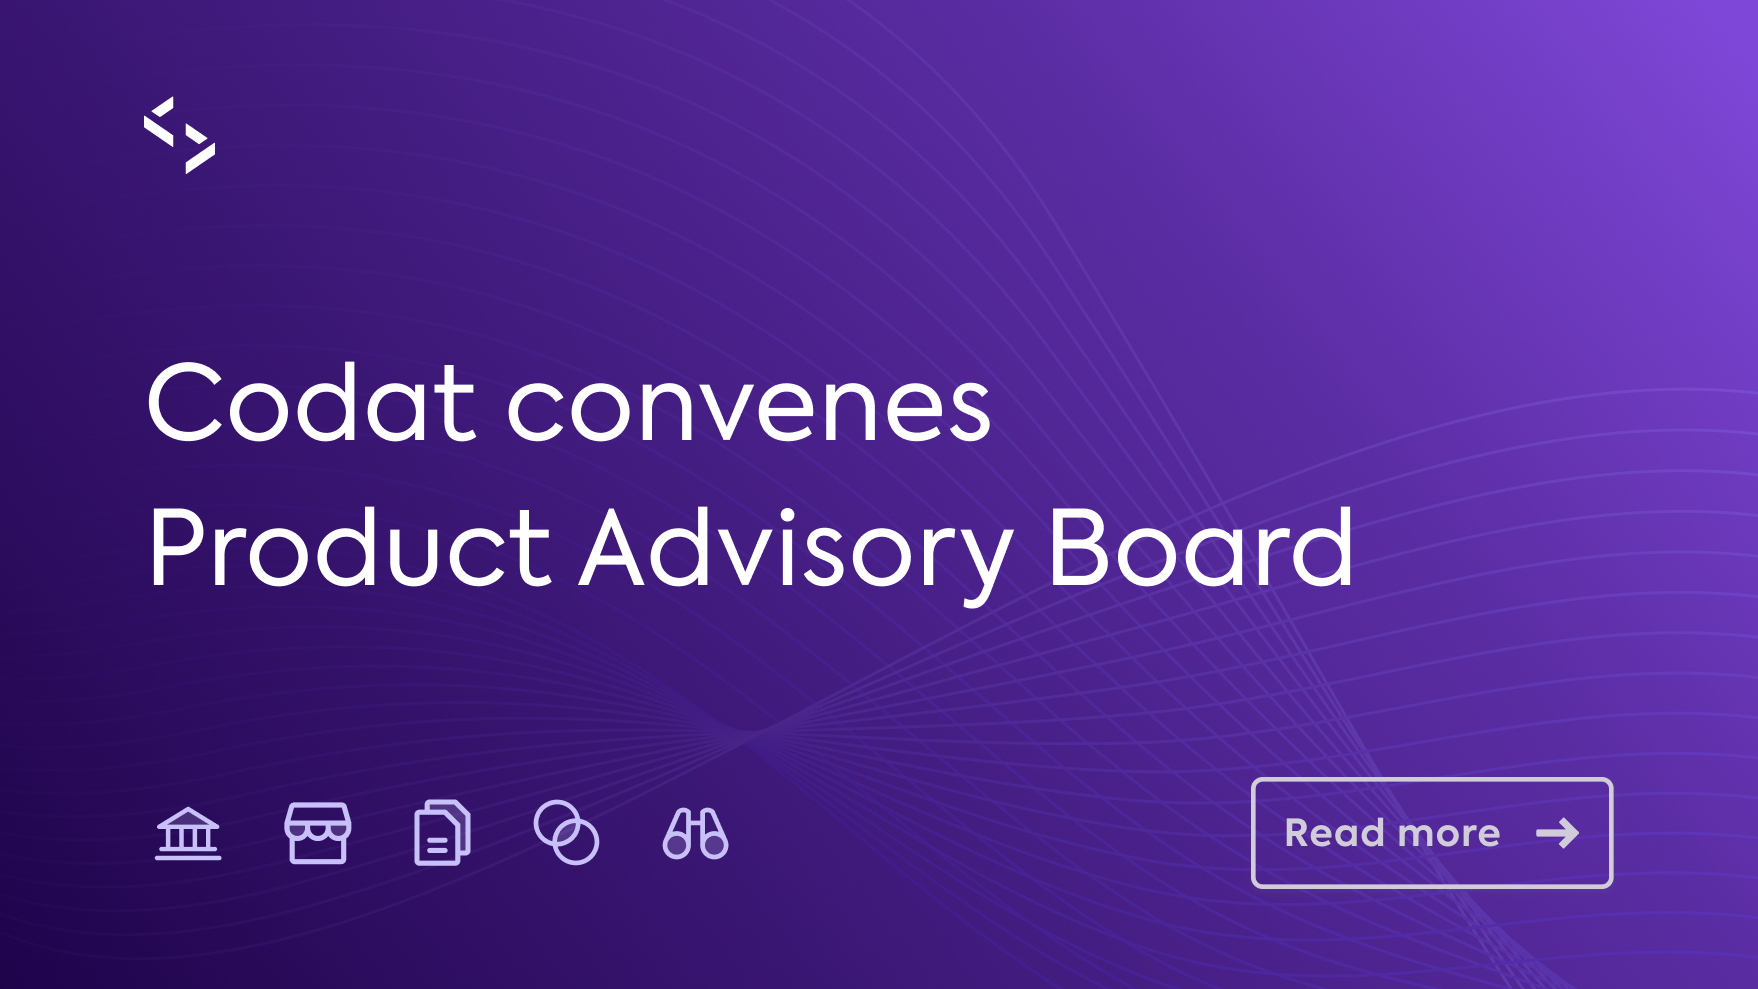 Codat convenes Product Advisory Board